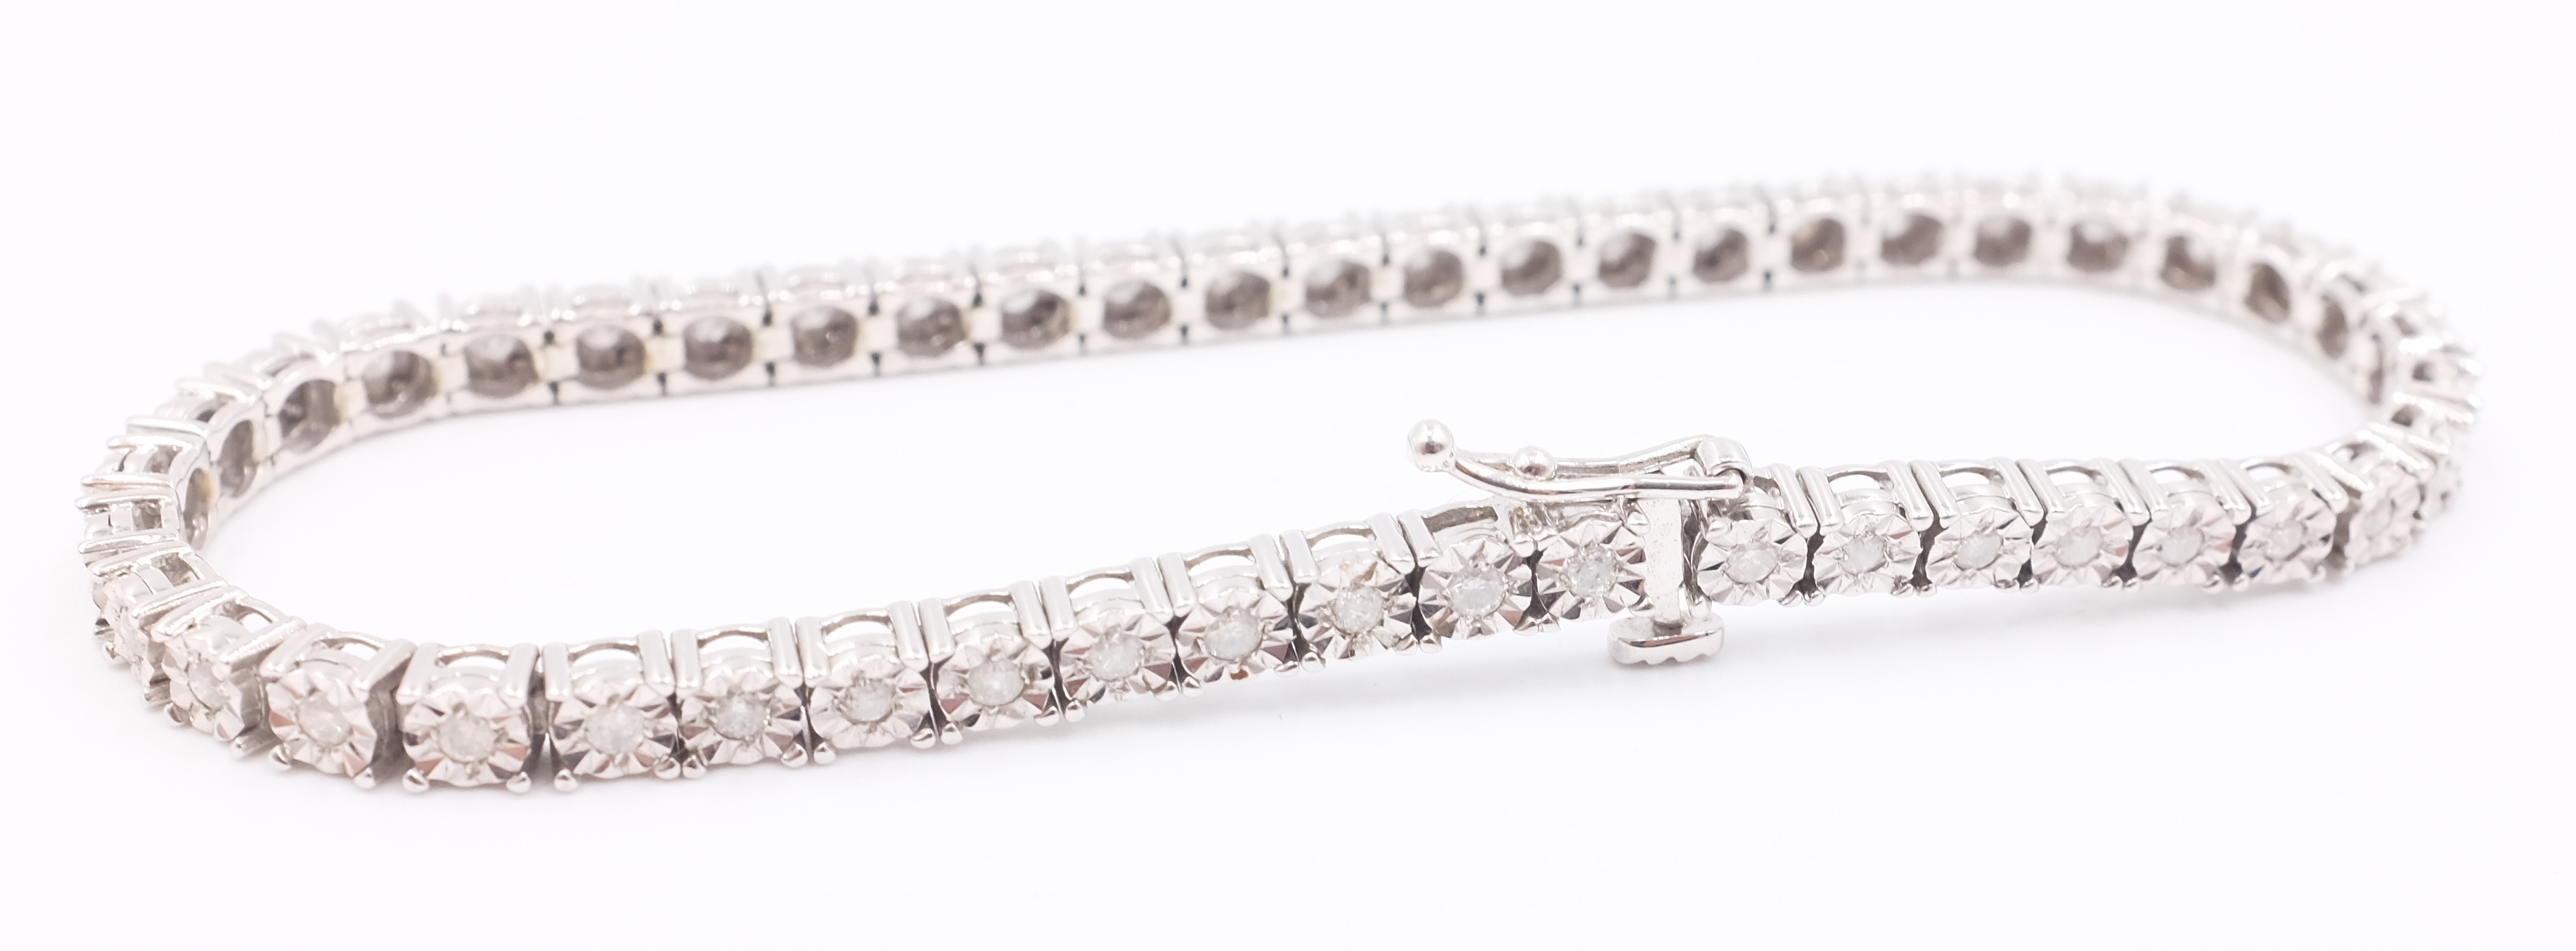 9ct white gold diamond tennis bracelet hallmarked diamonds = 1 carat Condition Report - Image 2 of 2